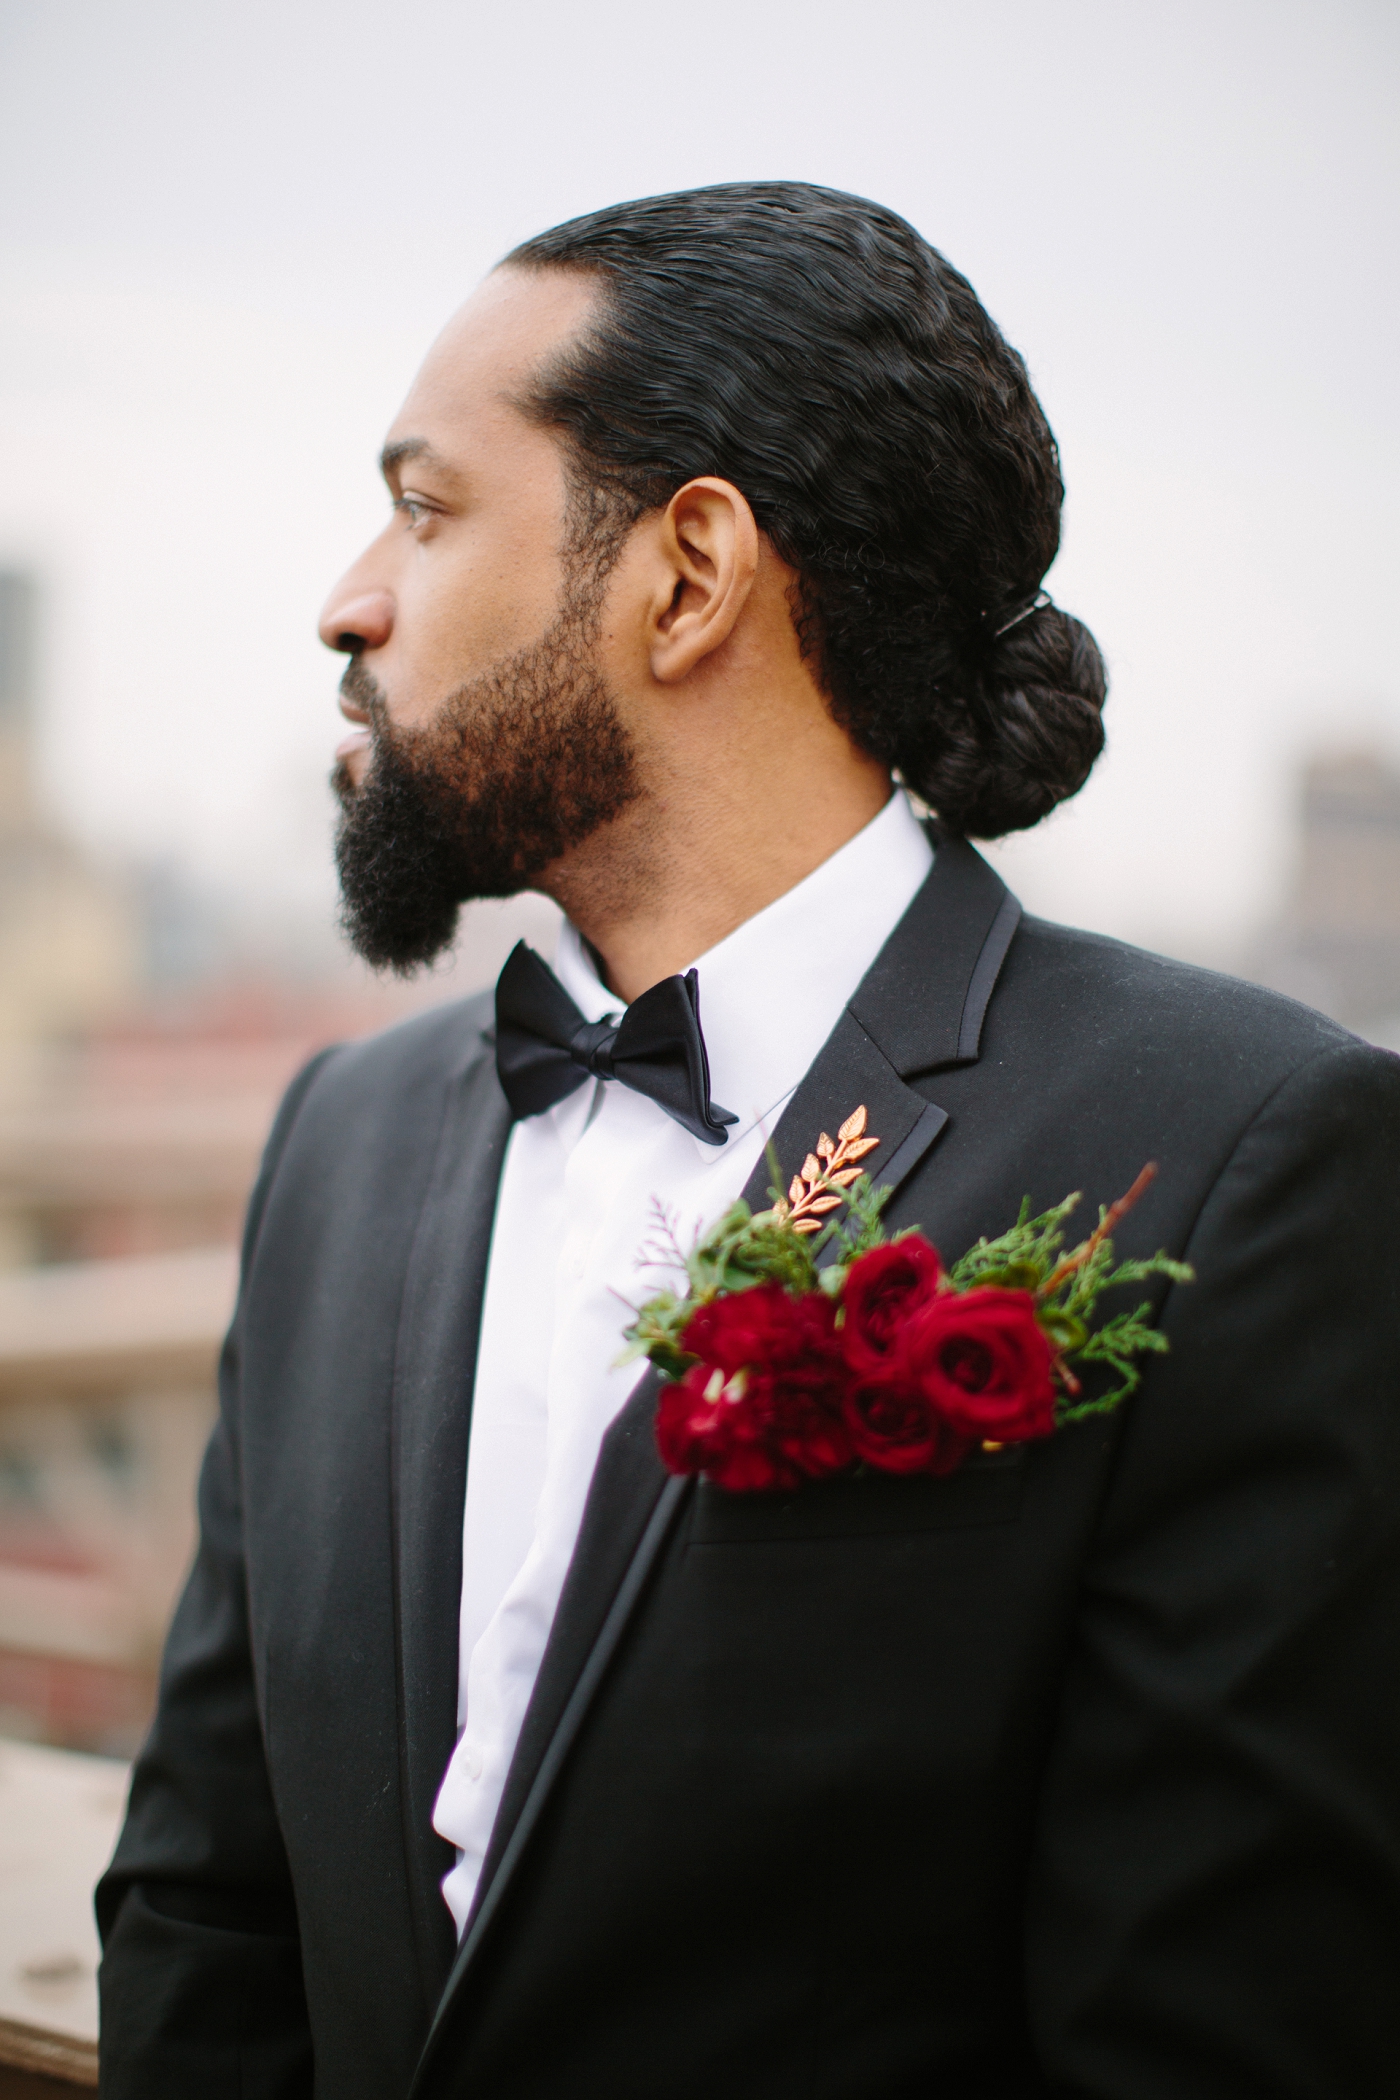 Brooklyn bridge groom photos by Samantha Clarke Photography